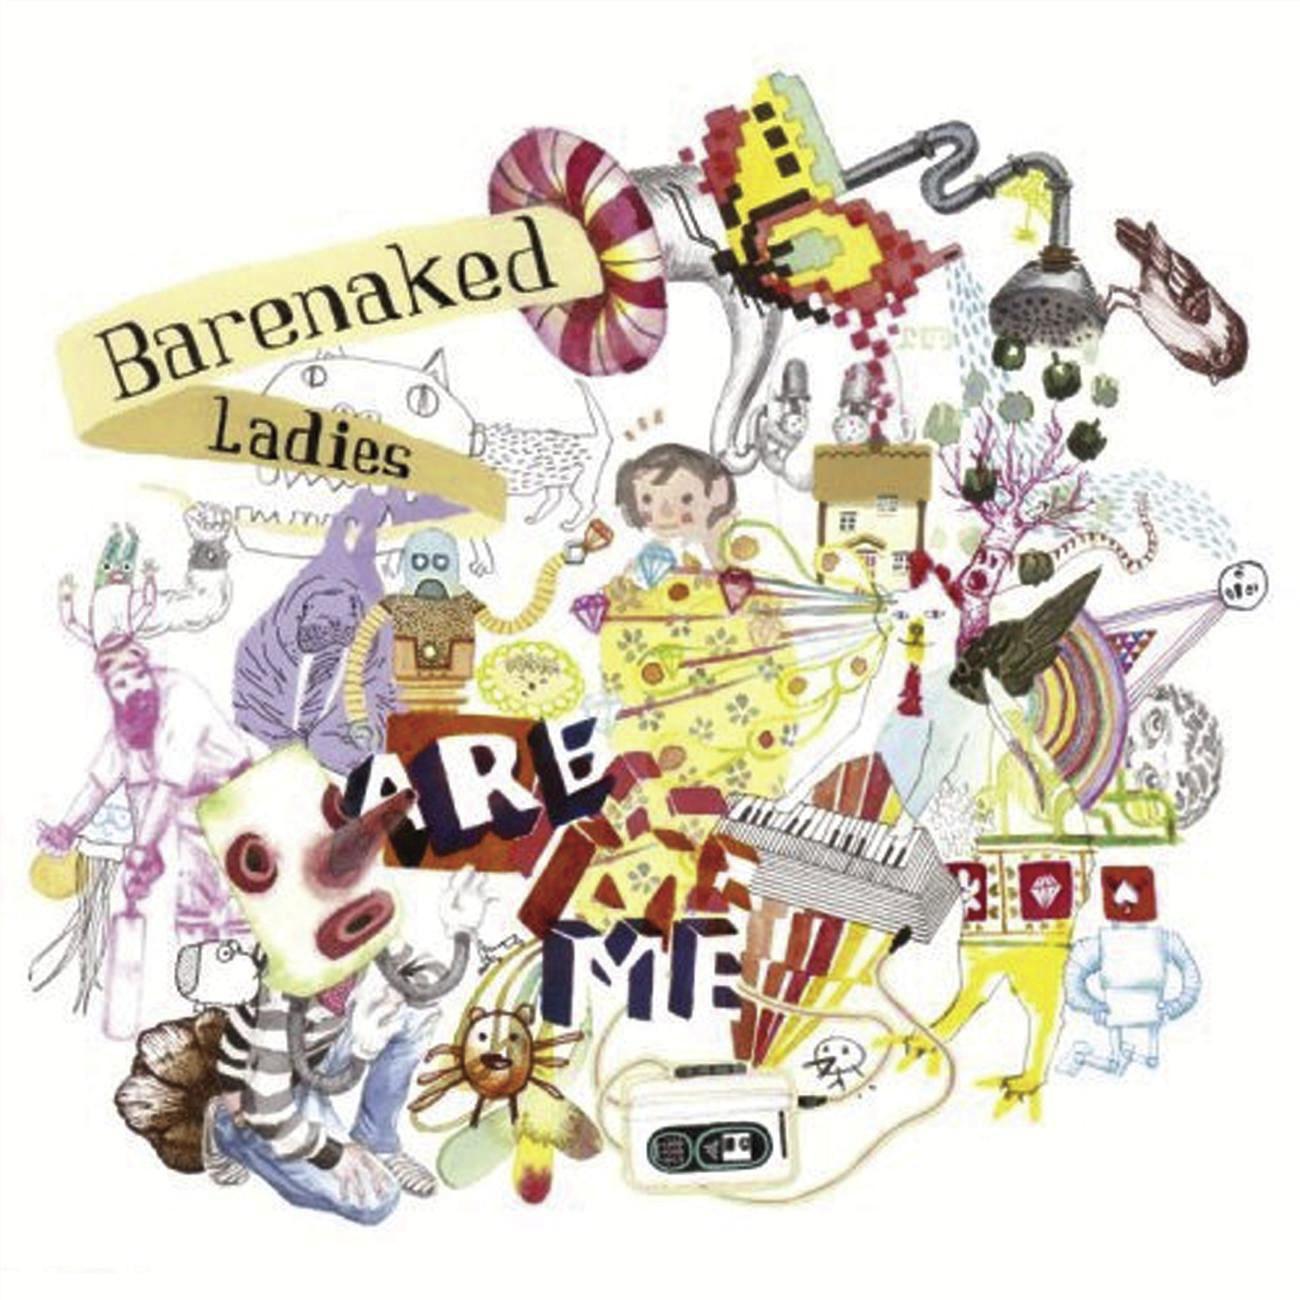 Barenaked Ladies Are Me专辑